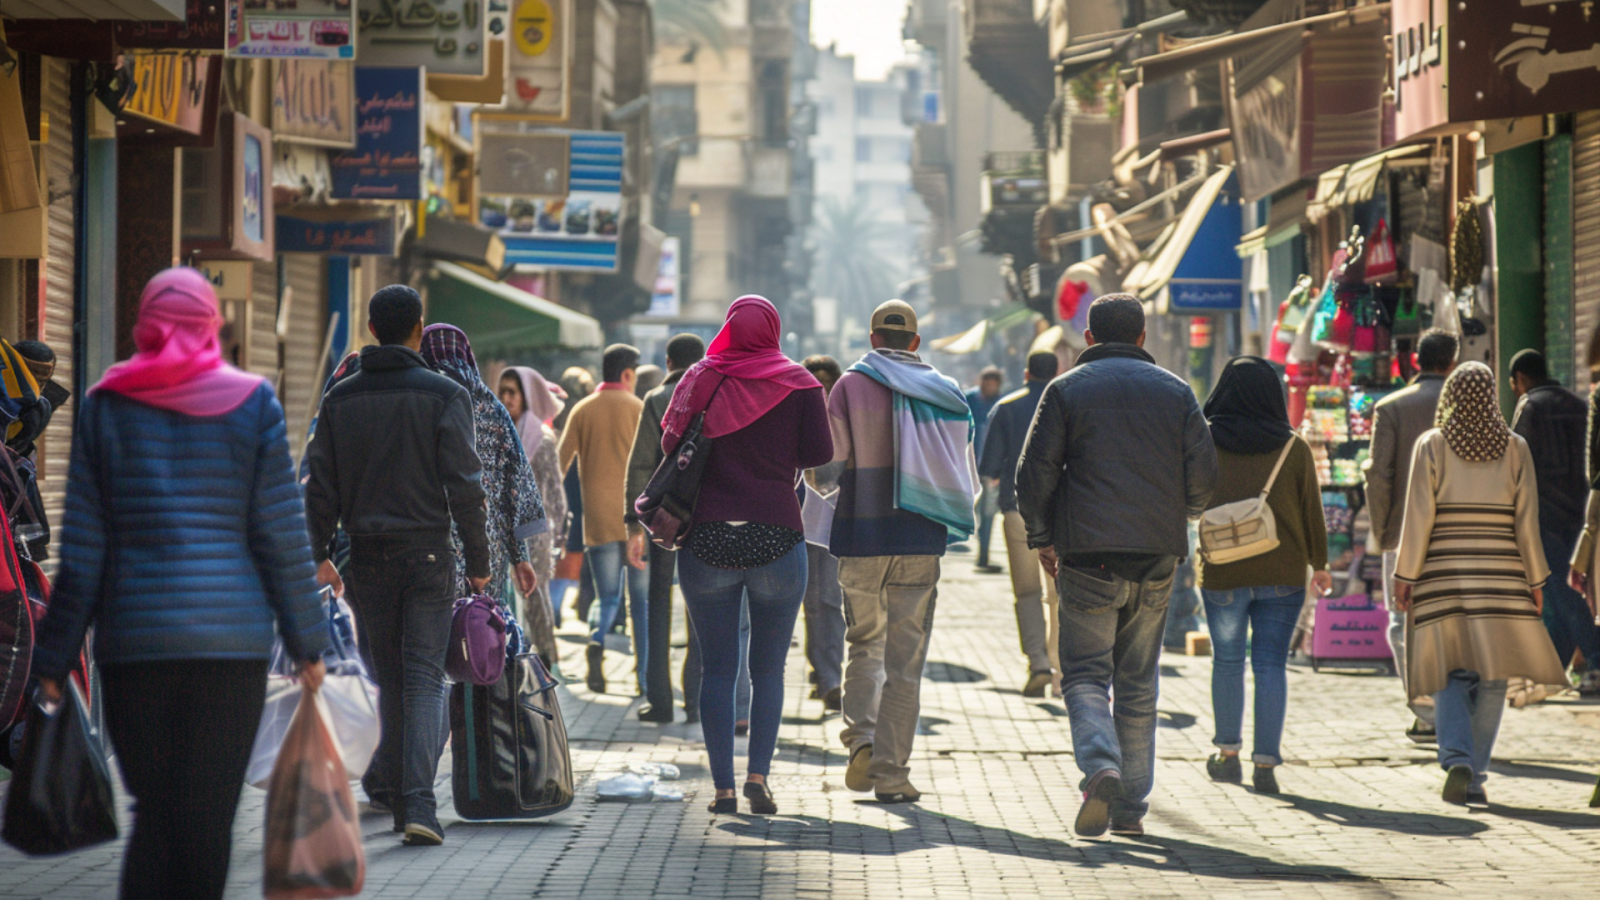 People walking along the street in Cairo, Egypt